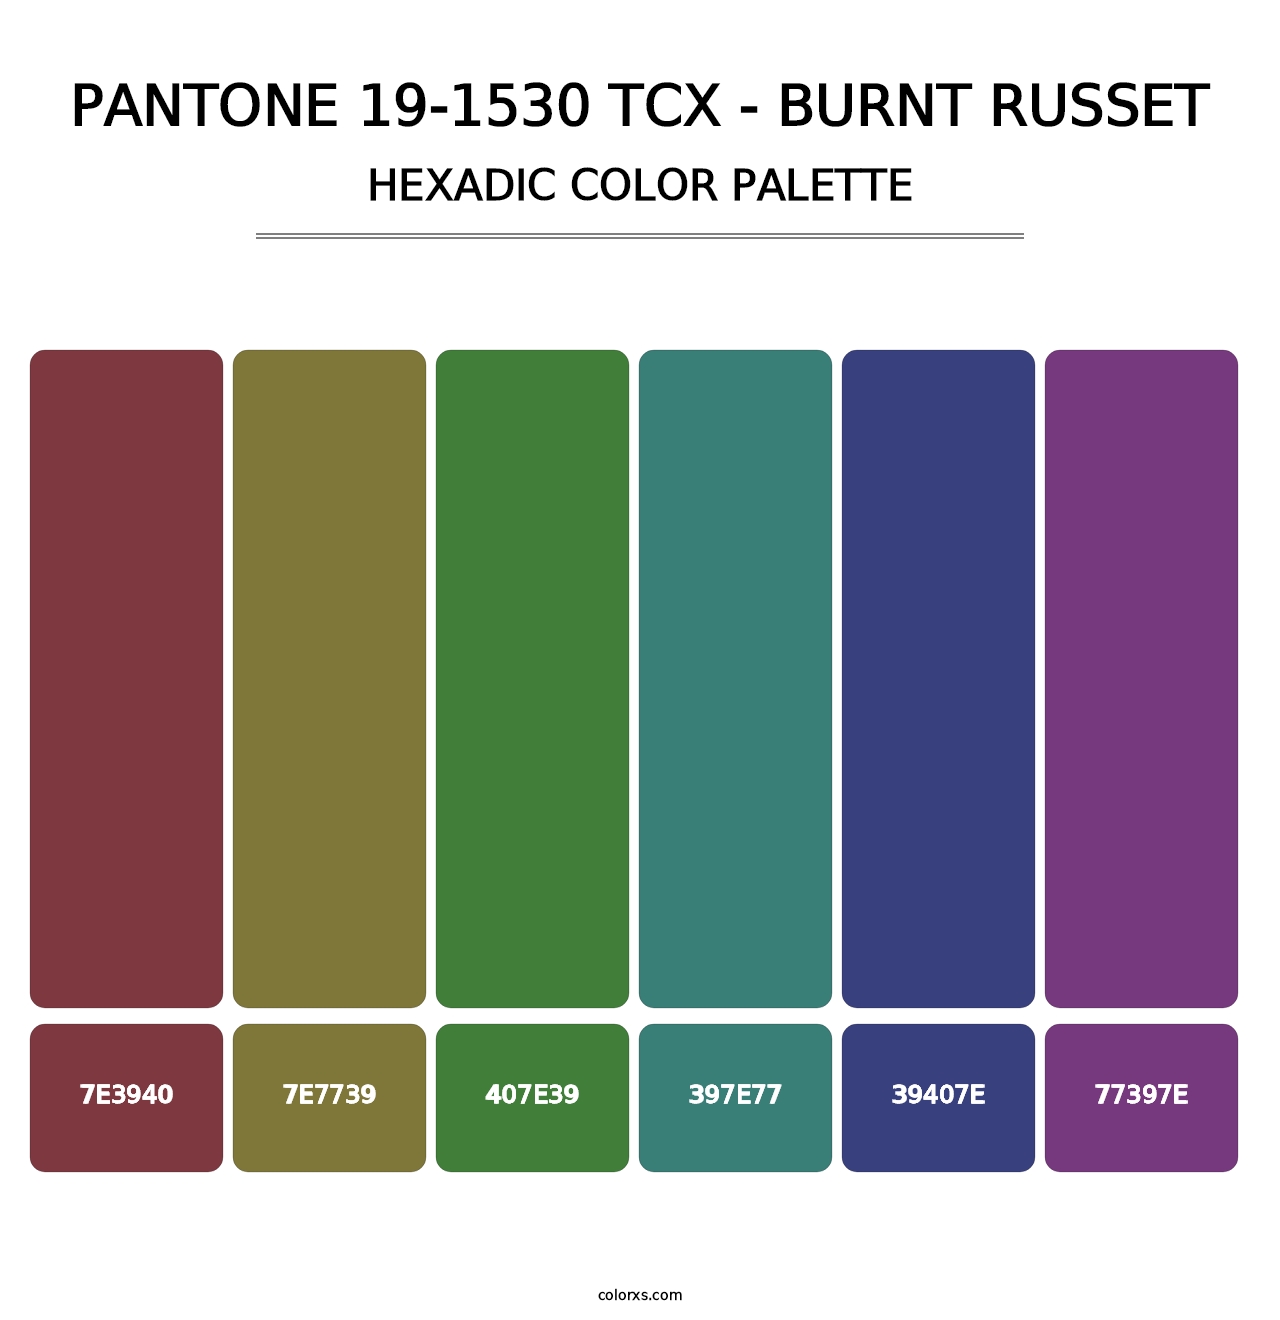 PANTONE 19-1530 TCX - Burnt Russet - Hexadic Color Palette